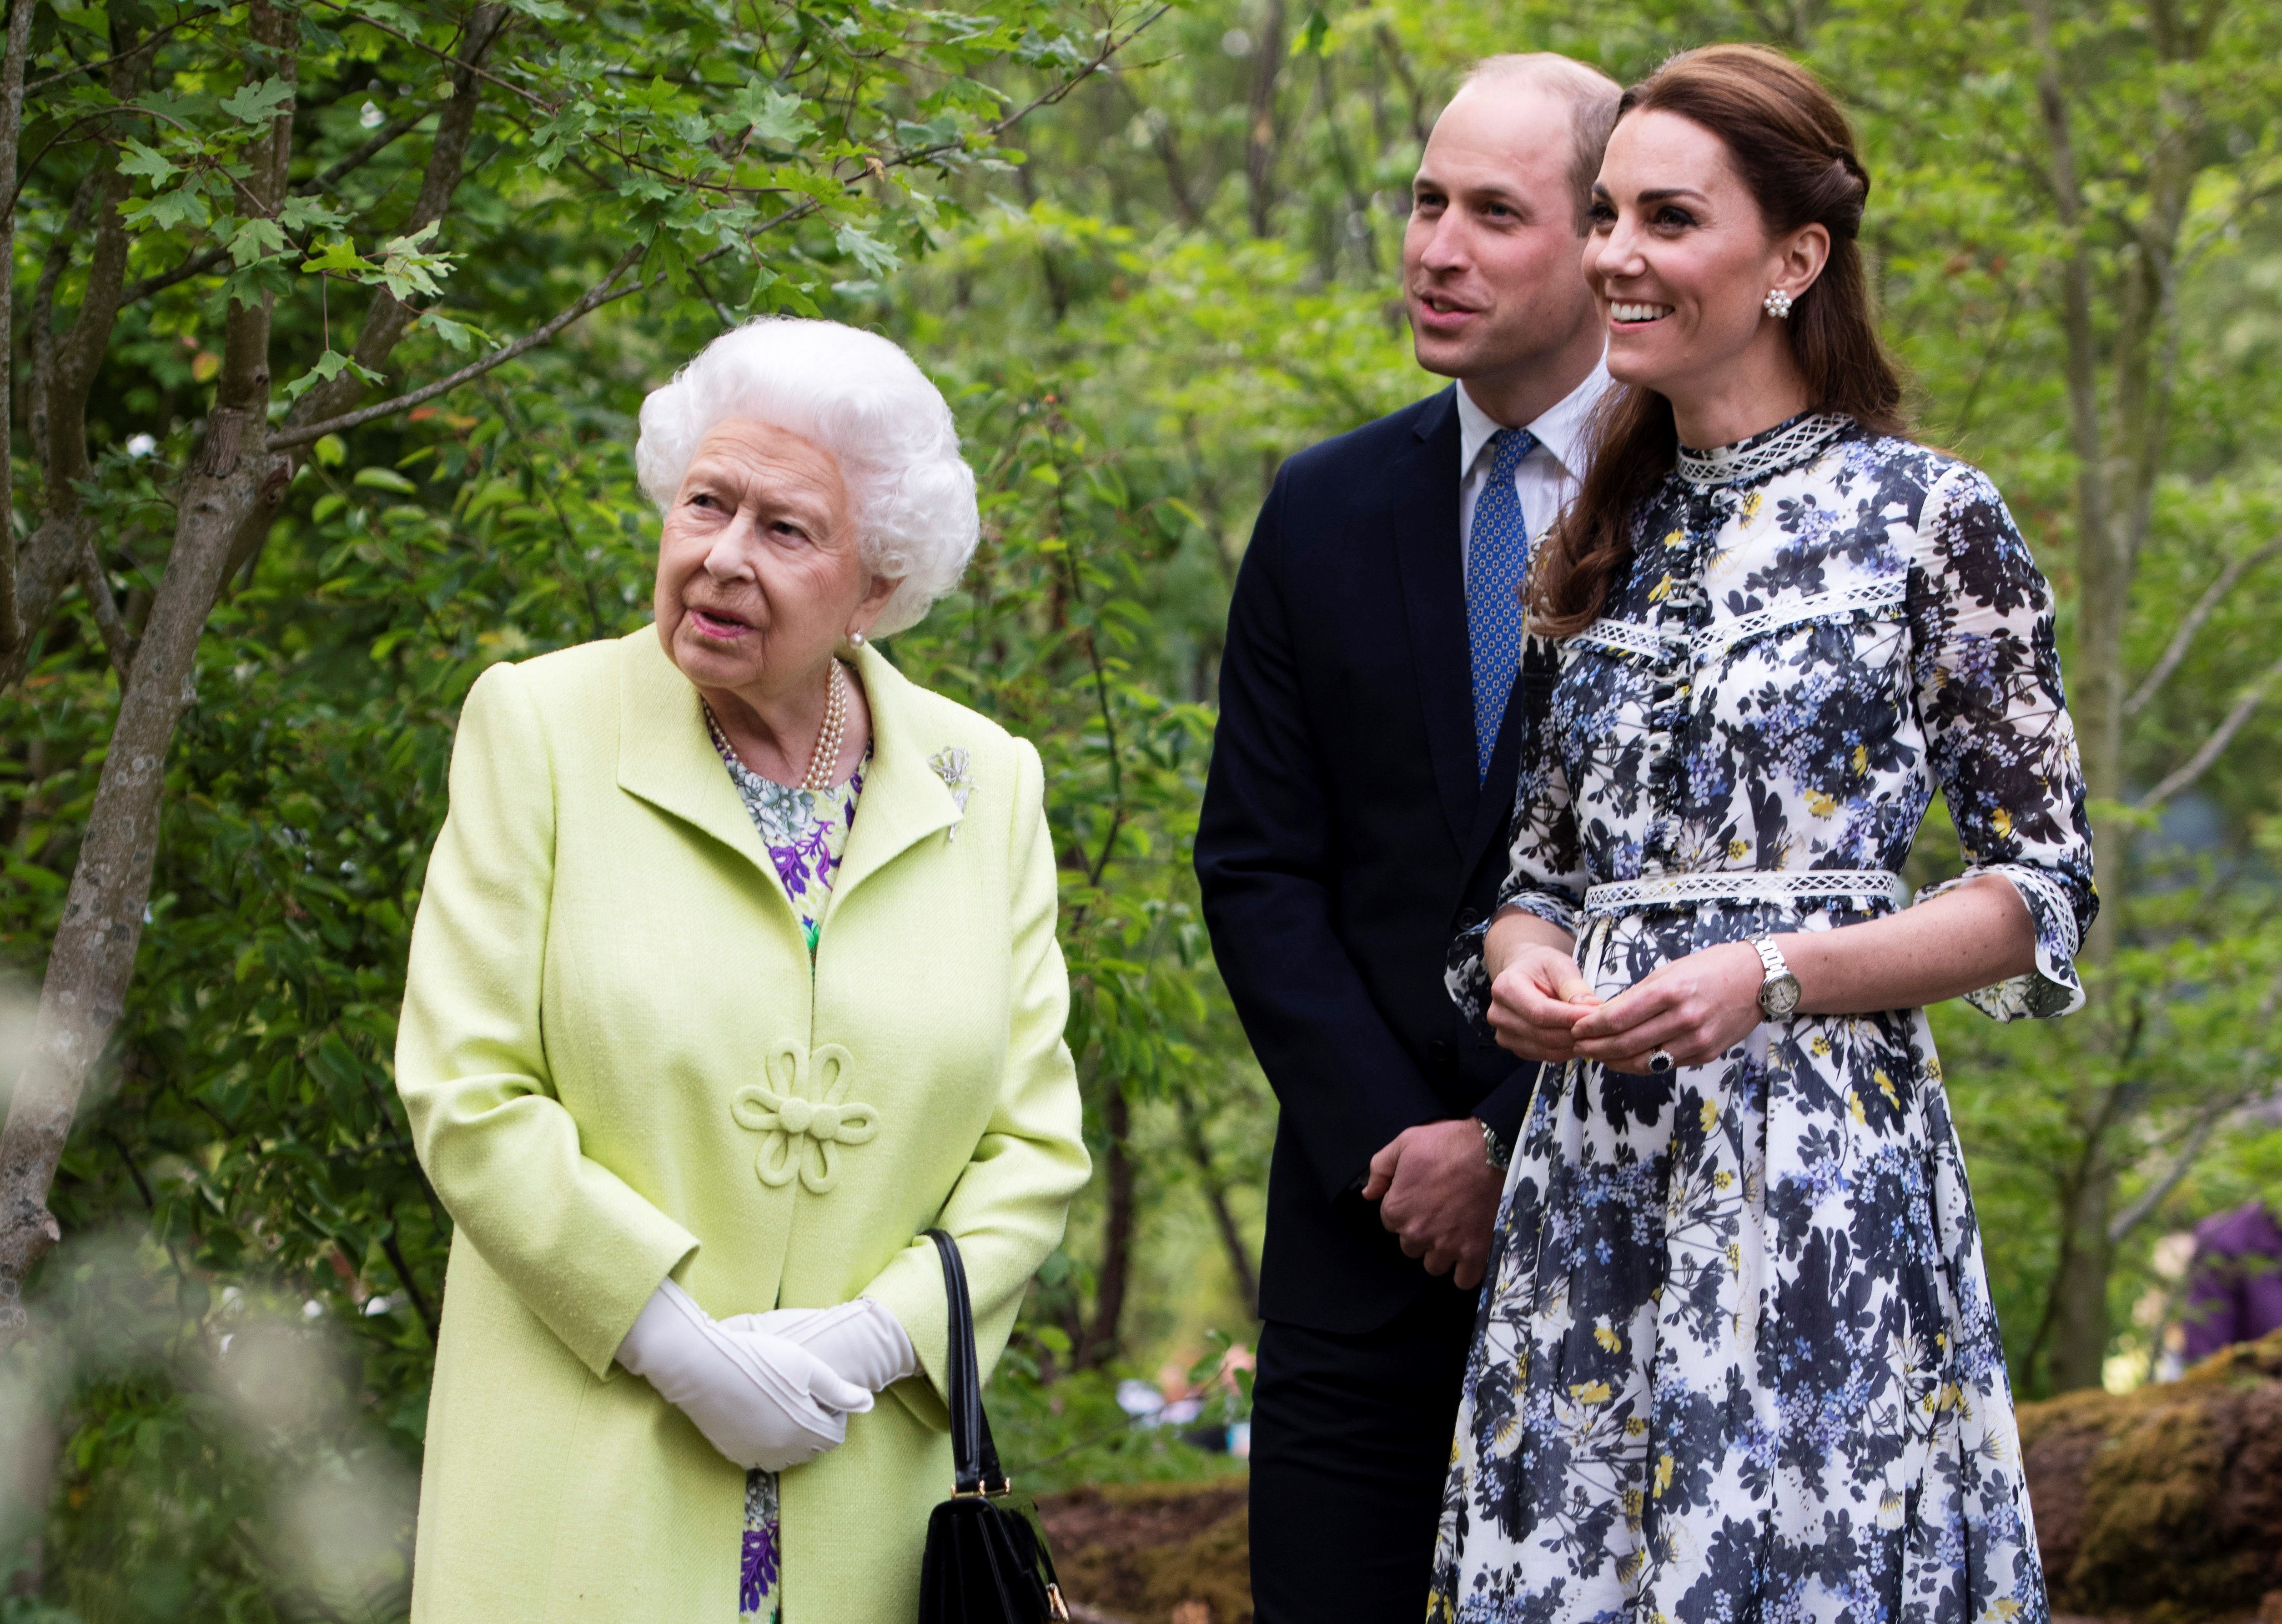 Kate Middleton alongside Prince William as she shows Queen Elizabeth II the 'Back to Nature Garden' she designed